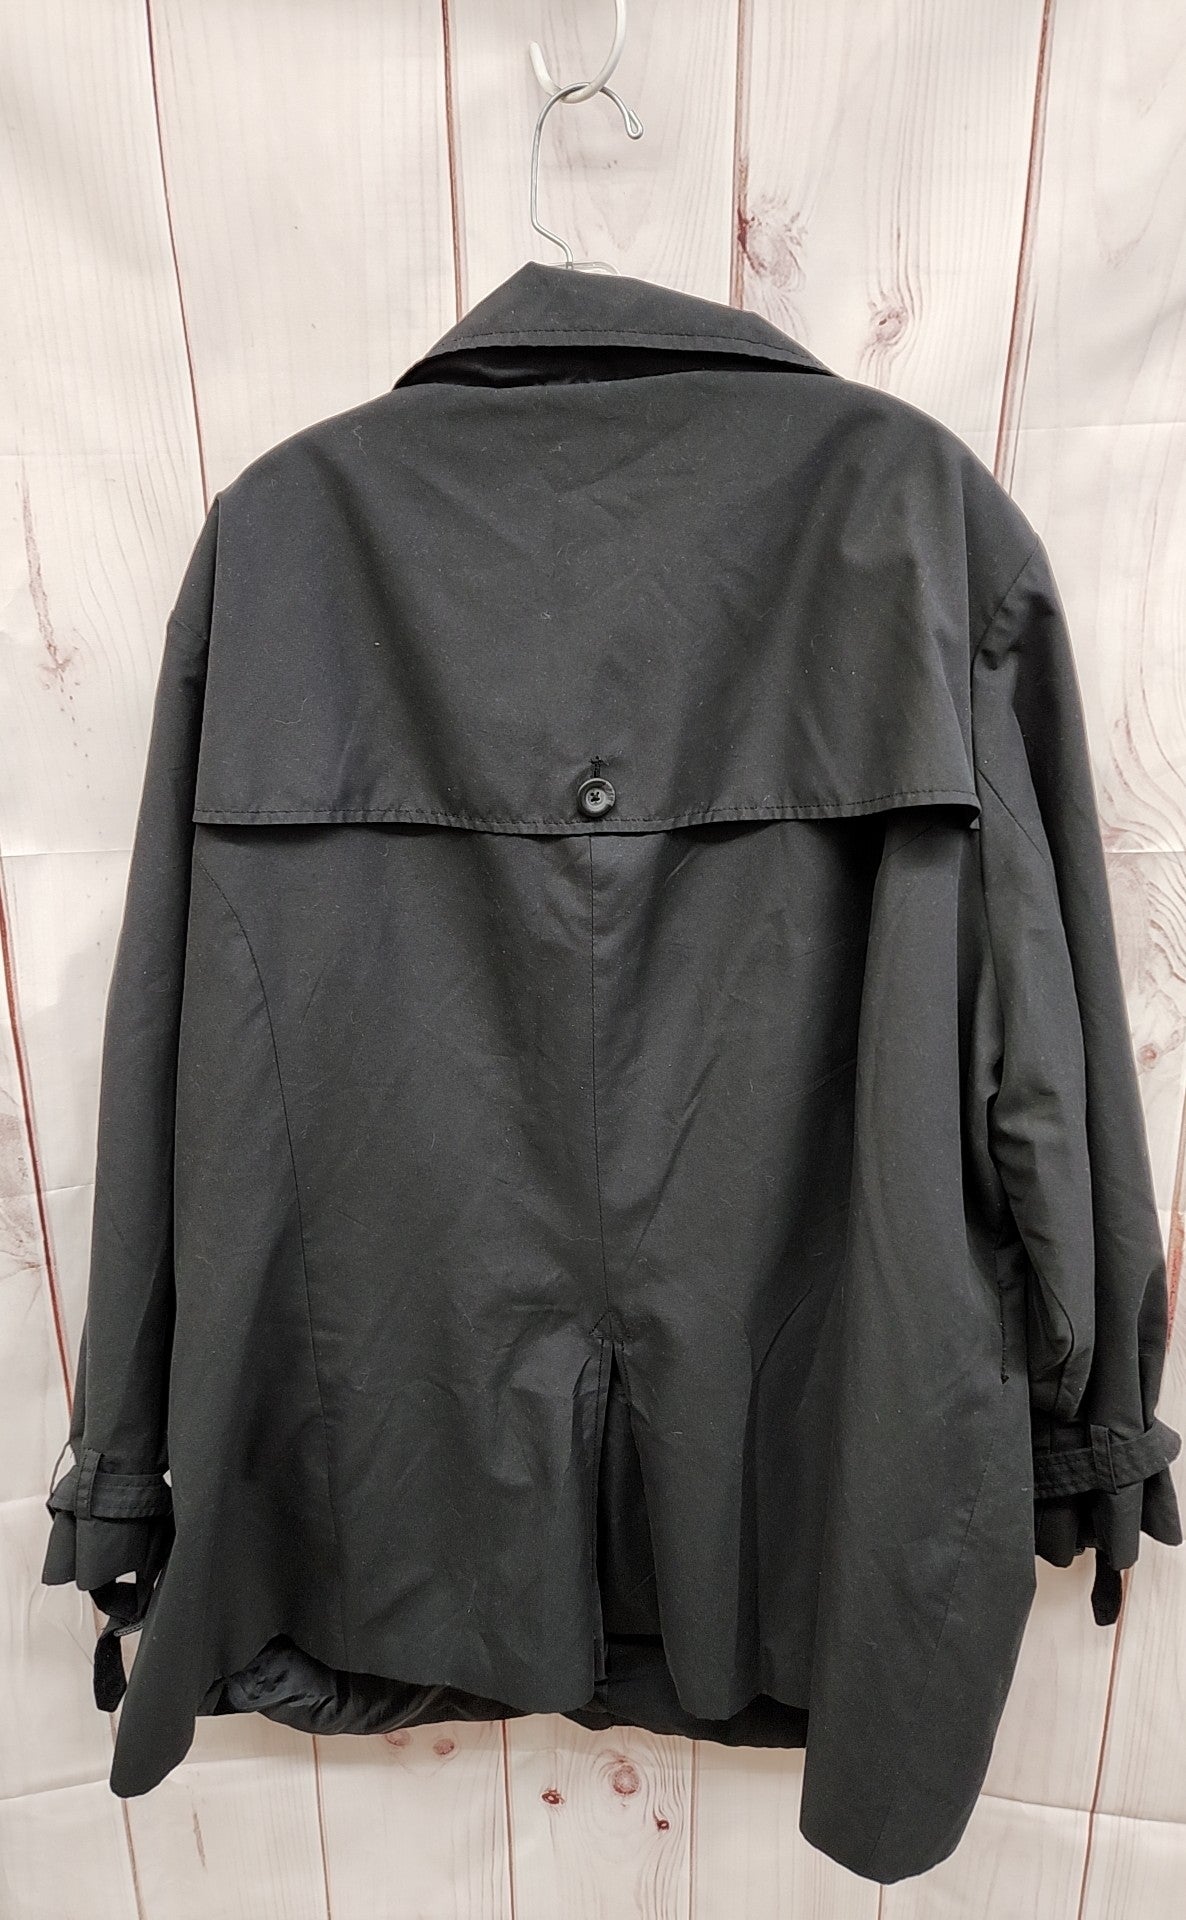 Roamans Women's Size 4X Black Raincoat